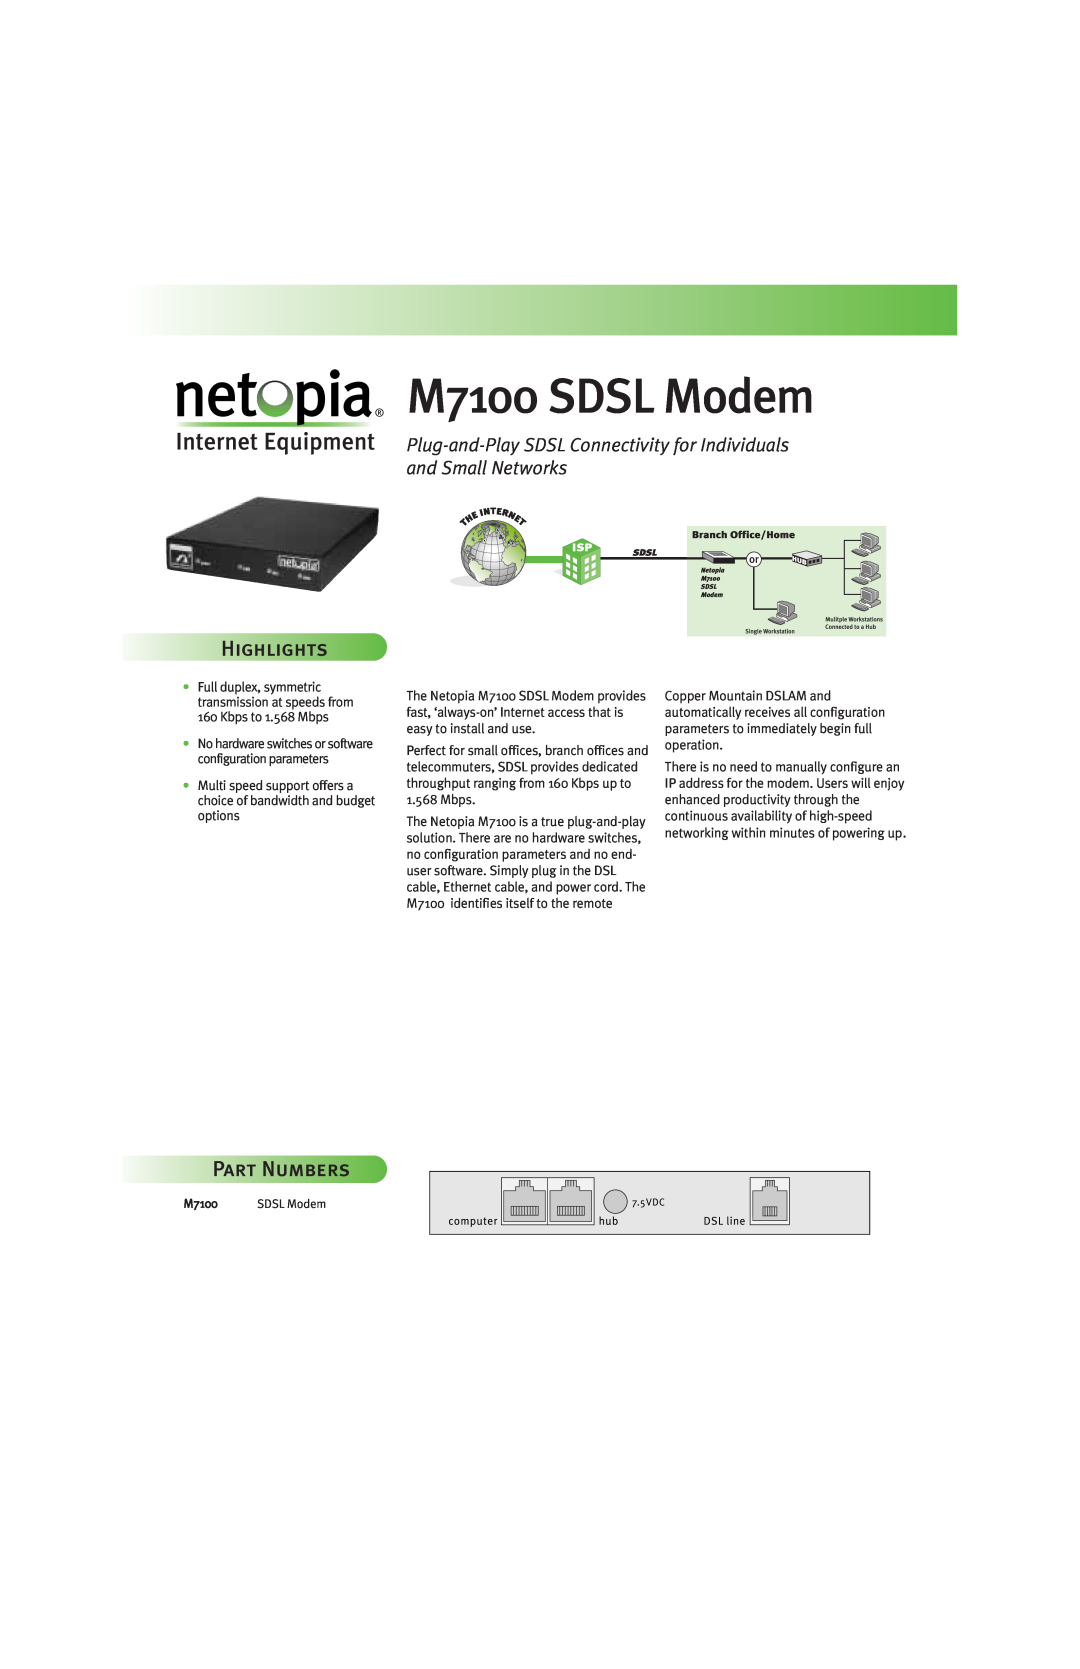 Netopia manual M7100 SDSL Modem, Highlights, PartNumbers 